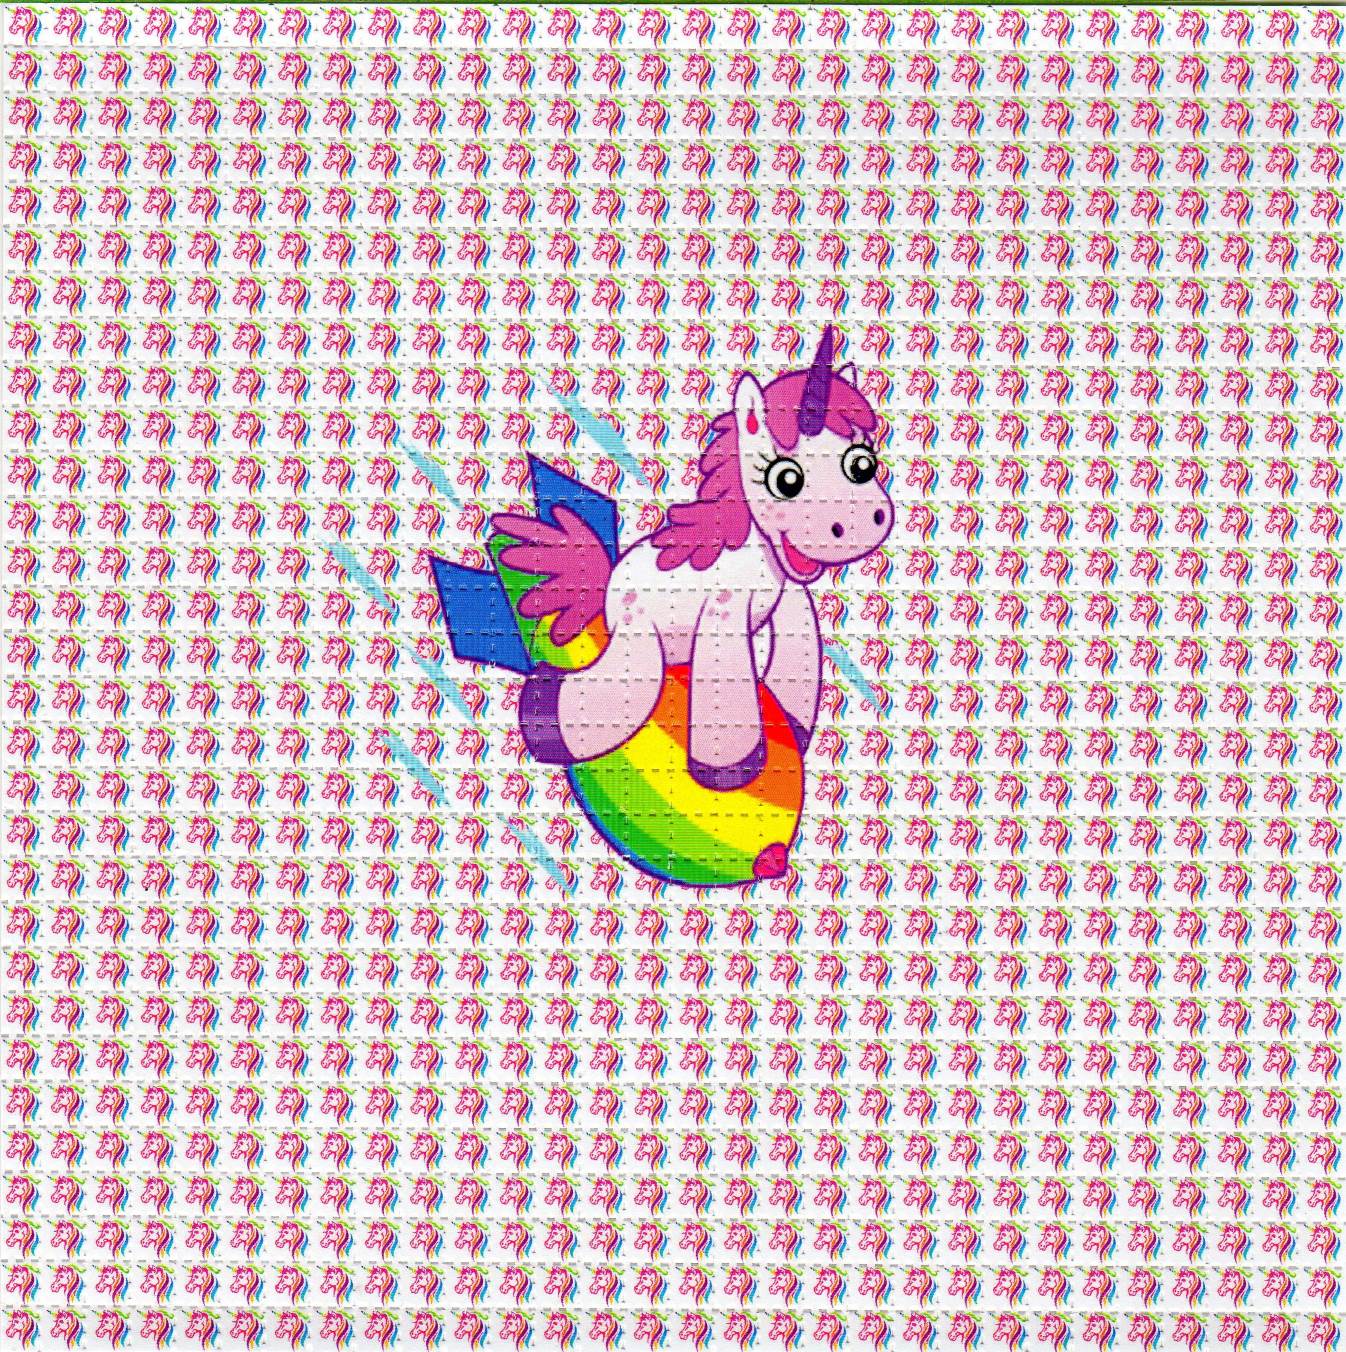 Pink Unicorns LSD blotter art print